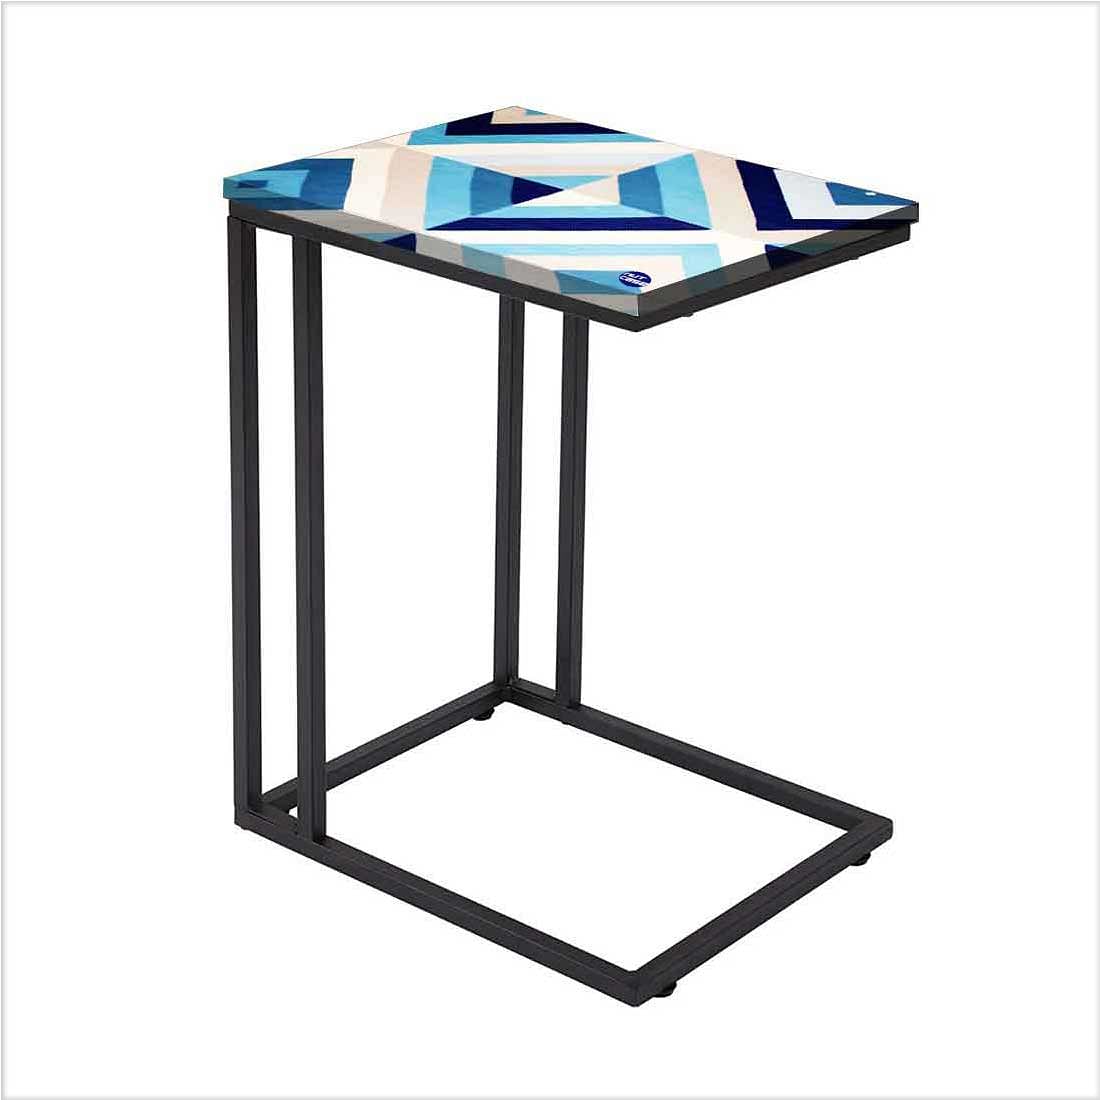 C Shaped End Table For Sofa - Blue Diamond Nutcase